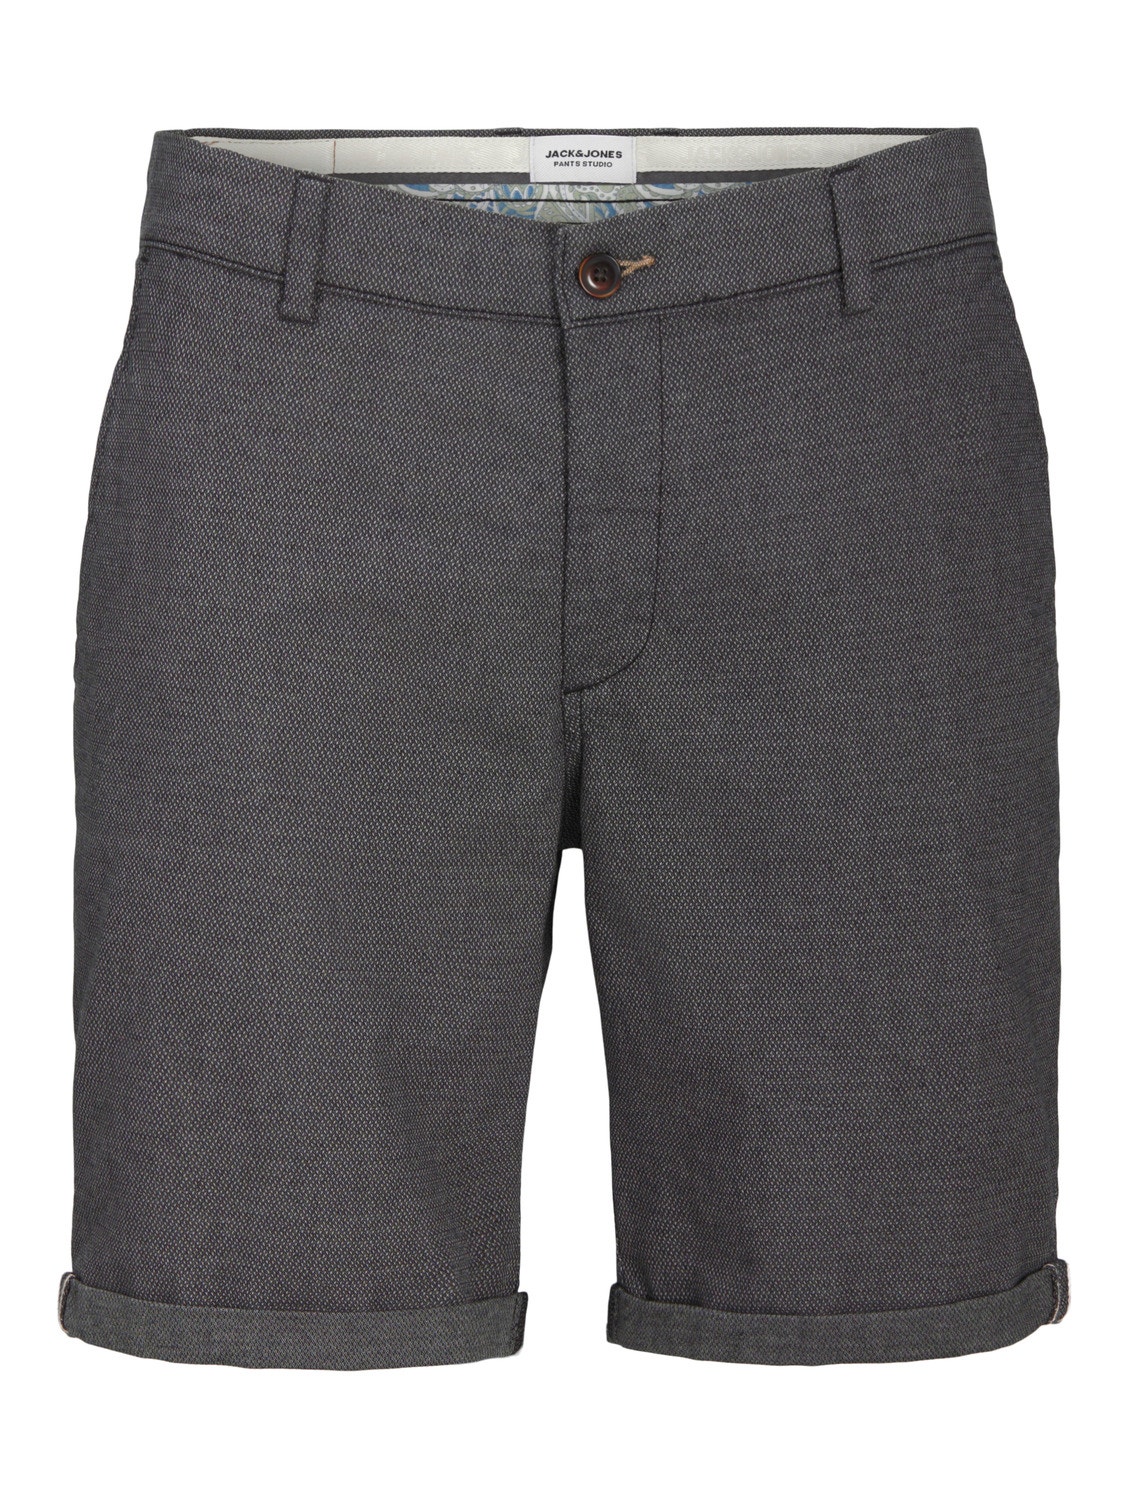 Jack & Jones Regular Fit Chino Shorts -Drizzle - 12206889